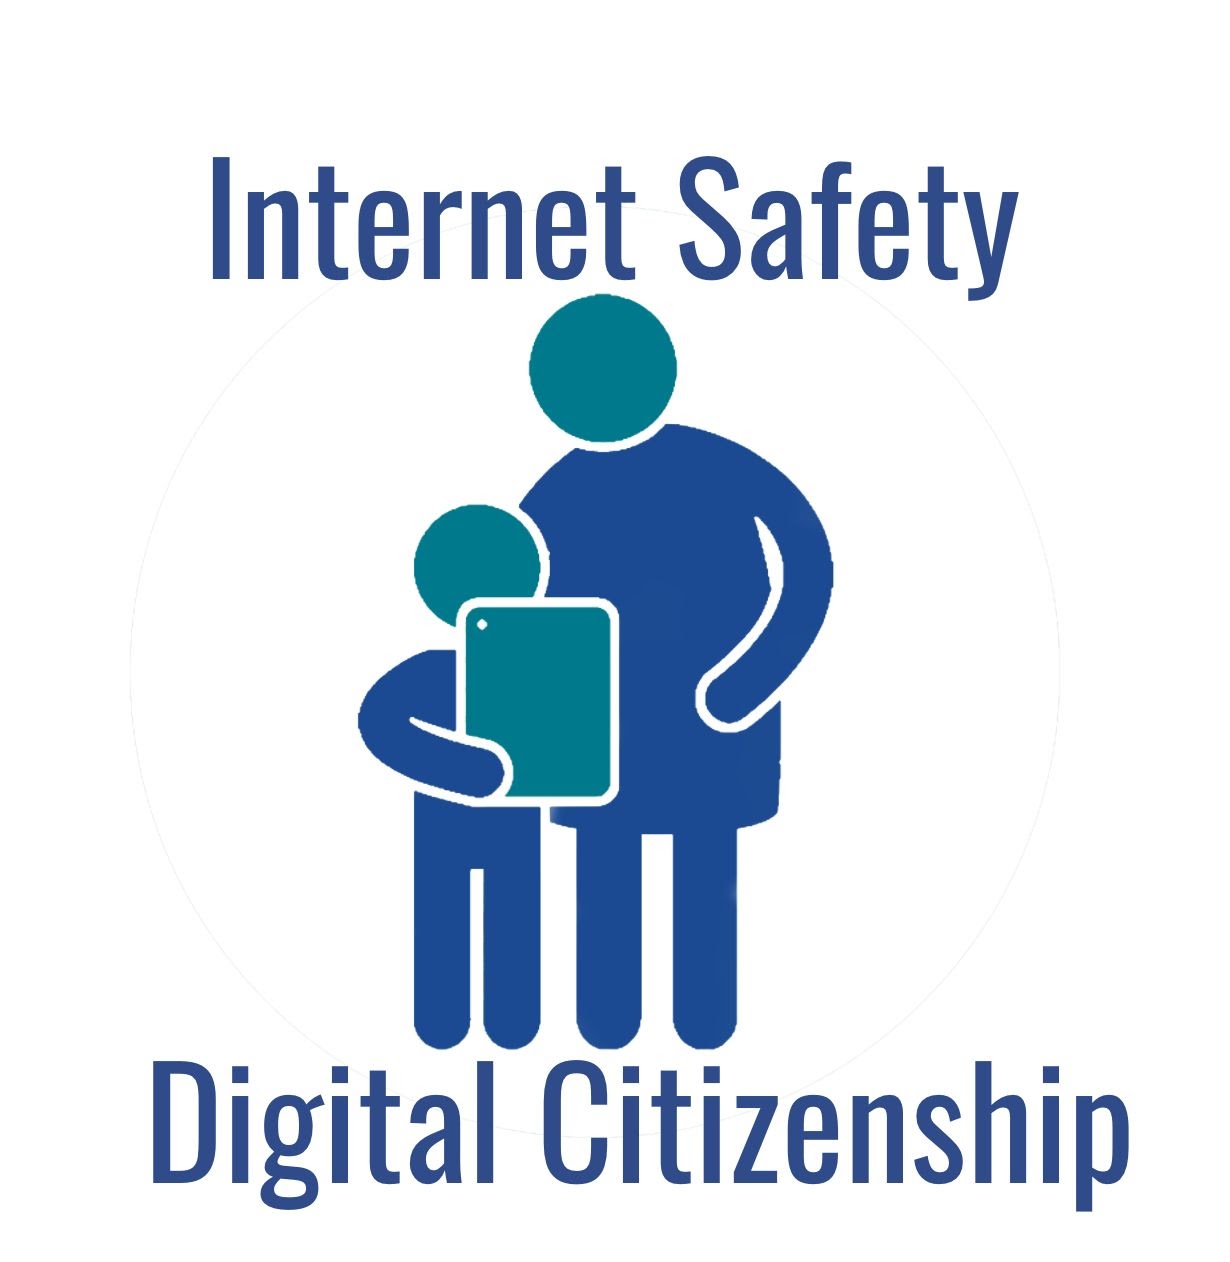 Internet safety digital citizenship